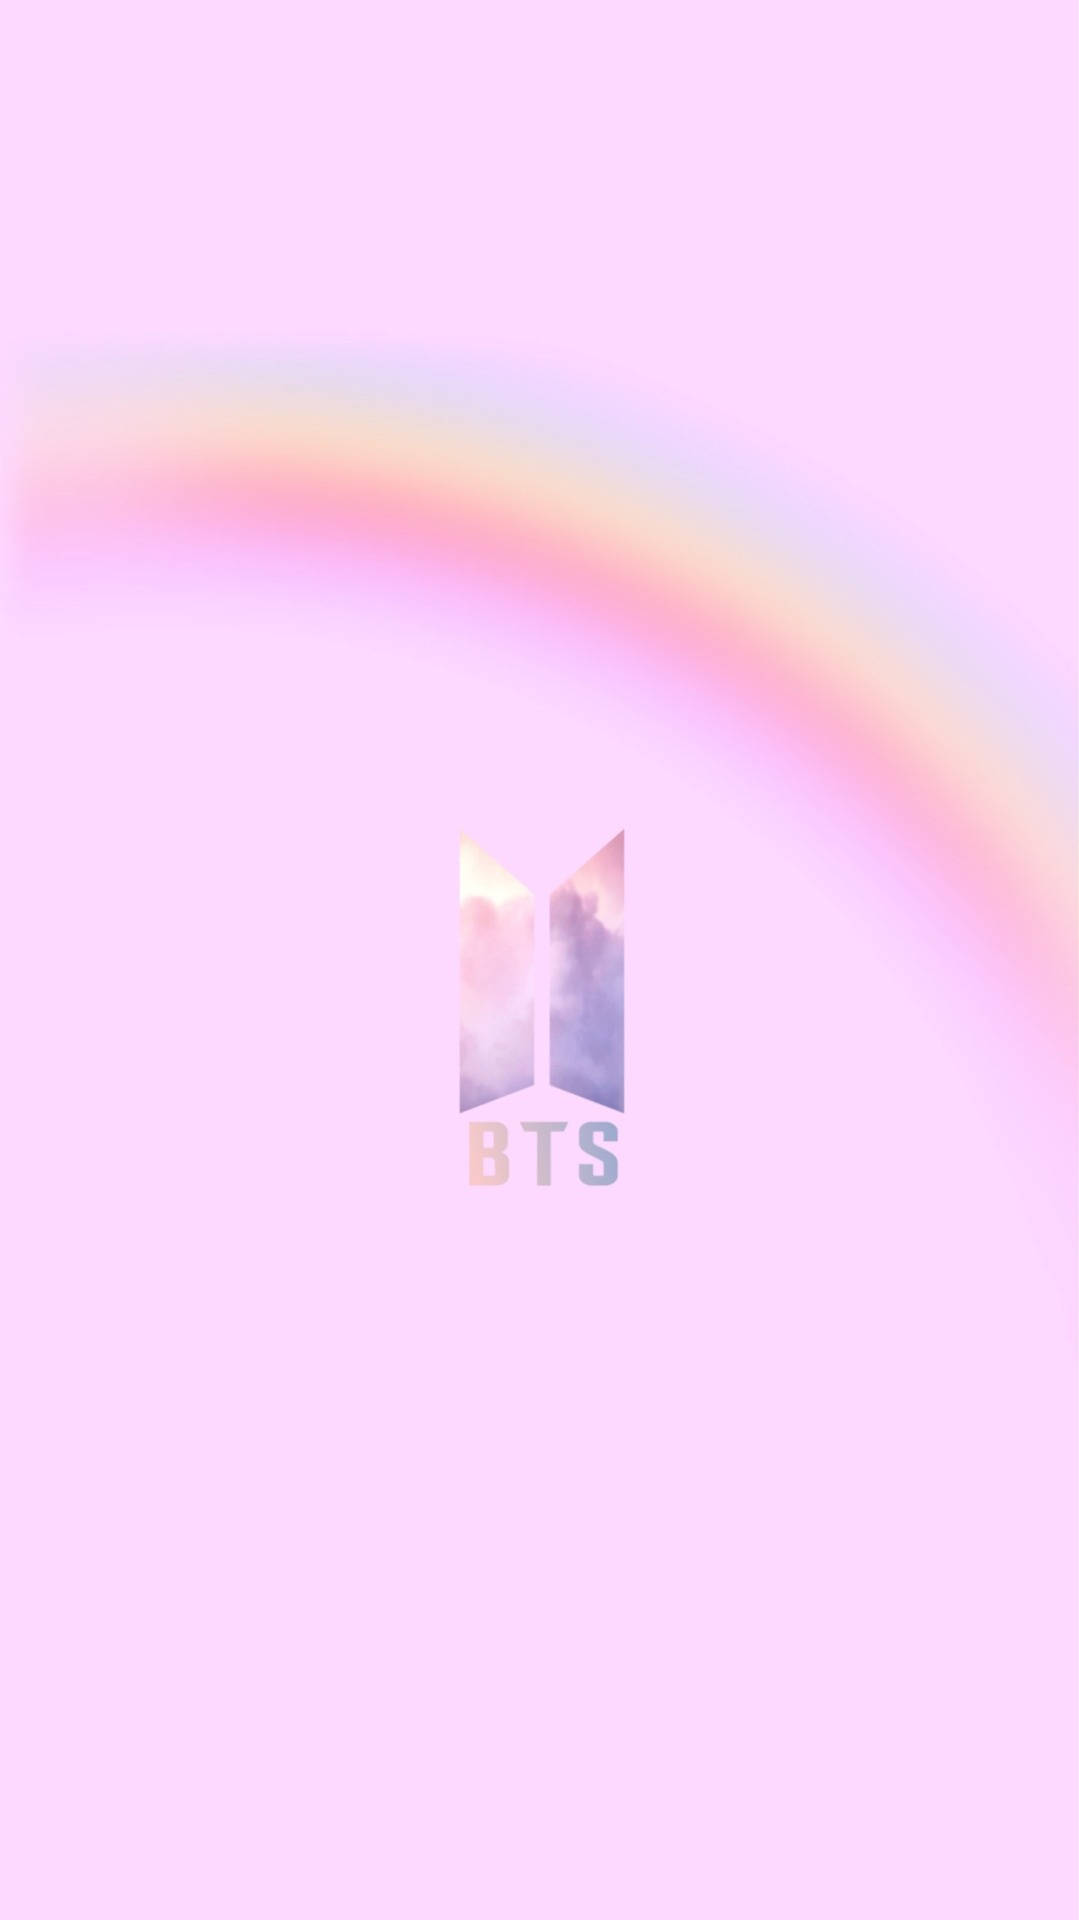 BTS Logos Wallpapers - Wallpaper Cave